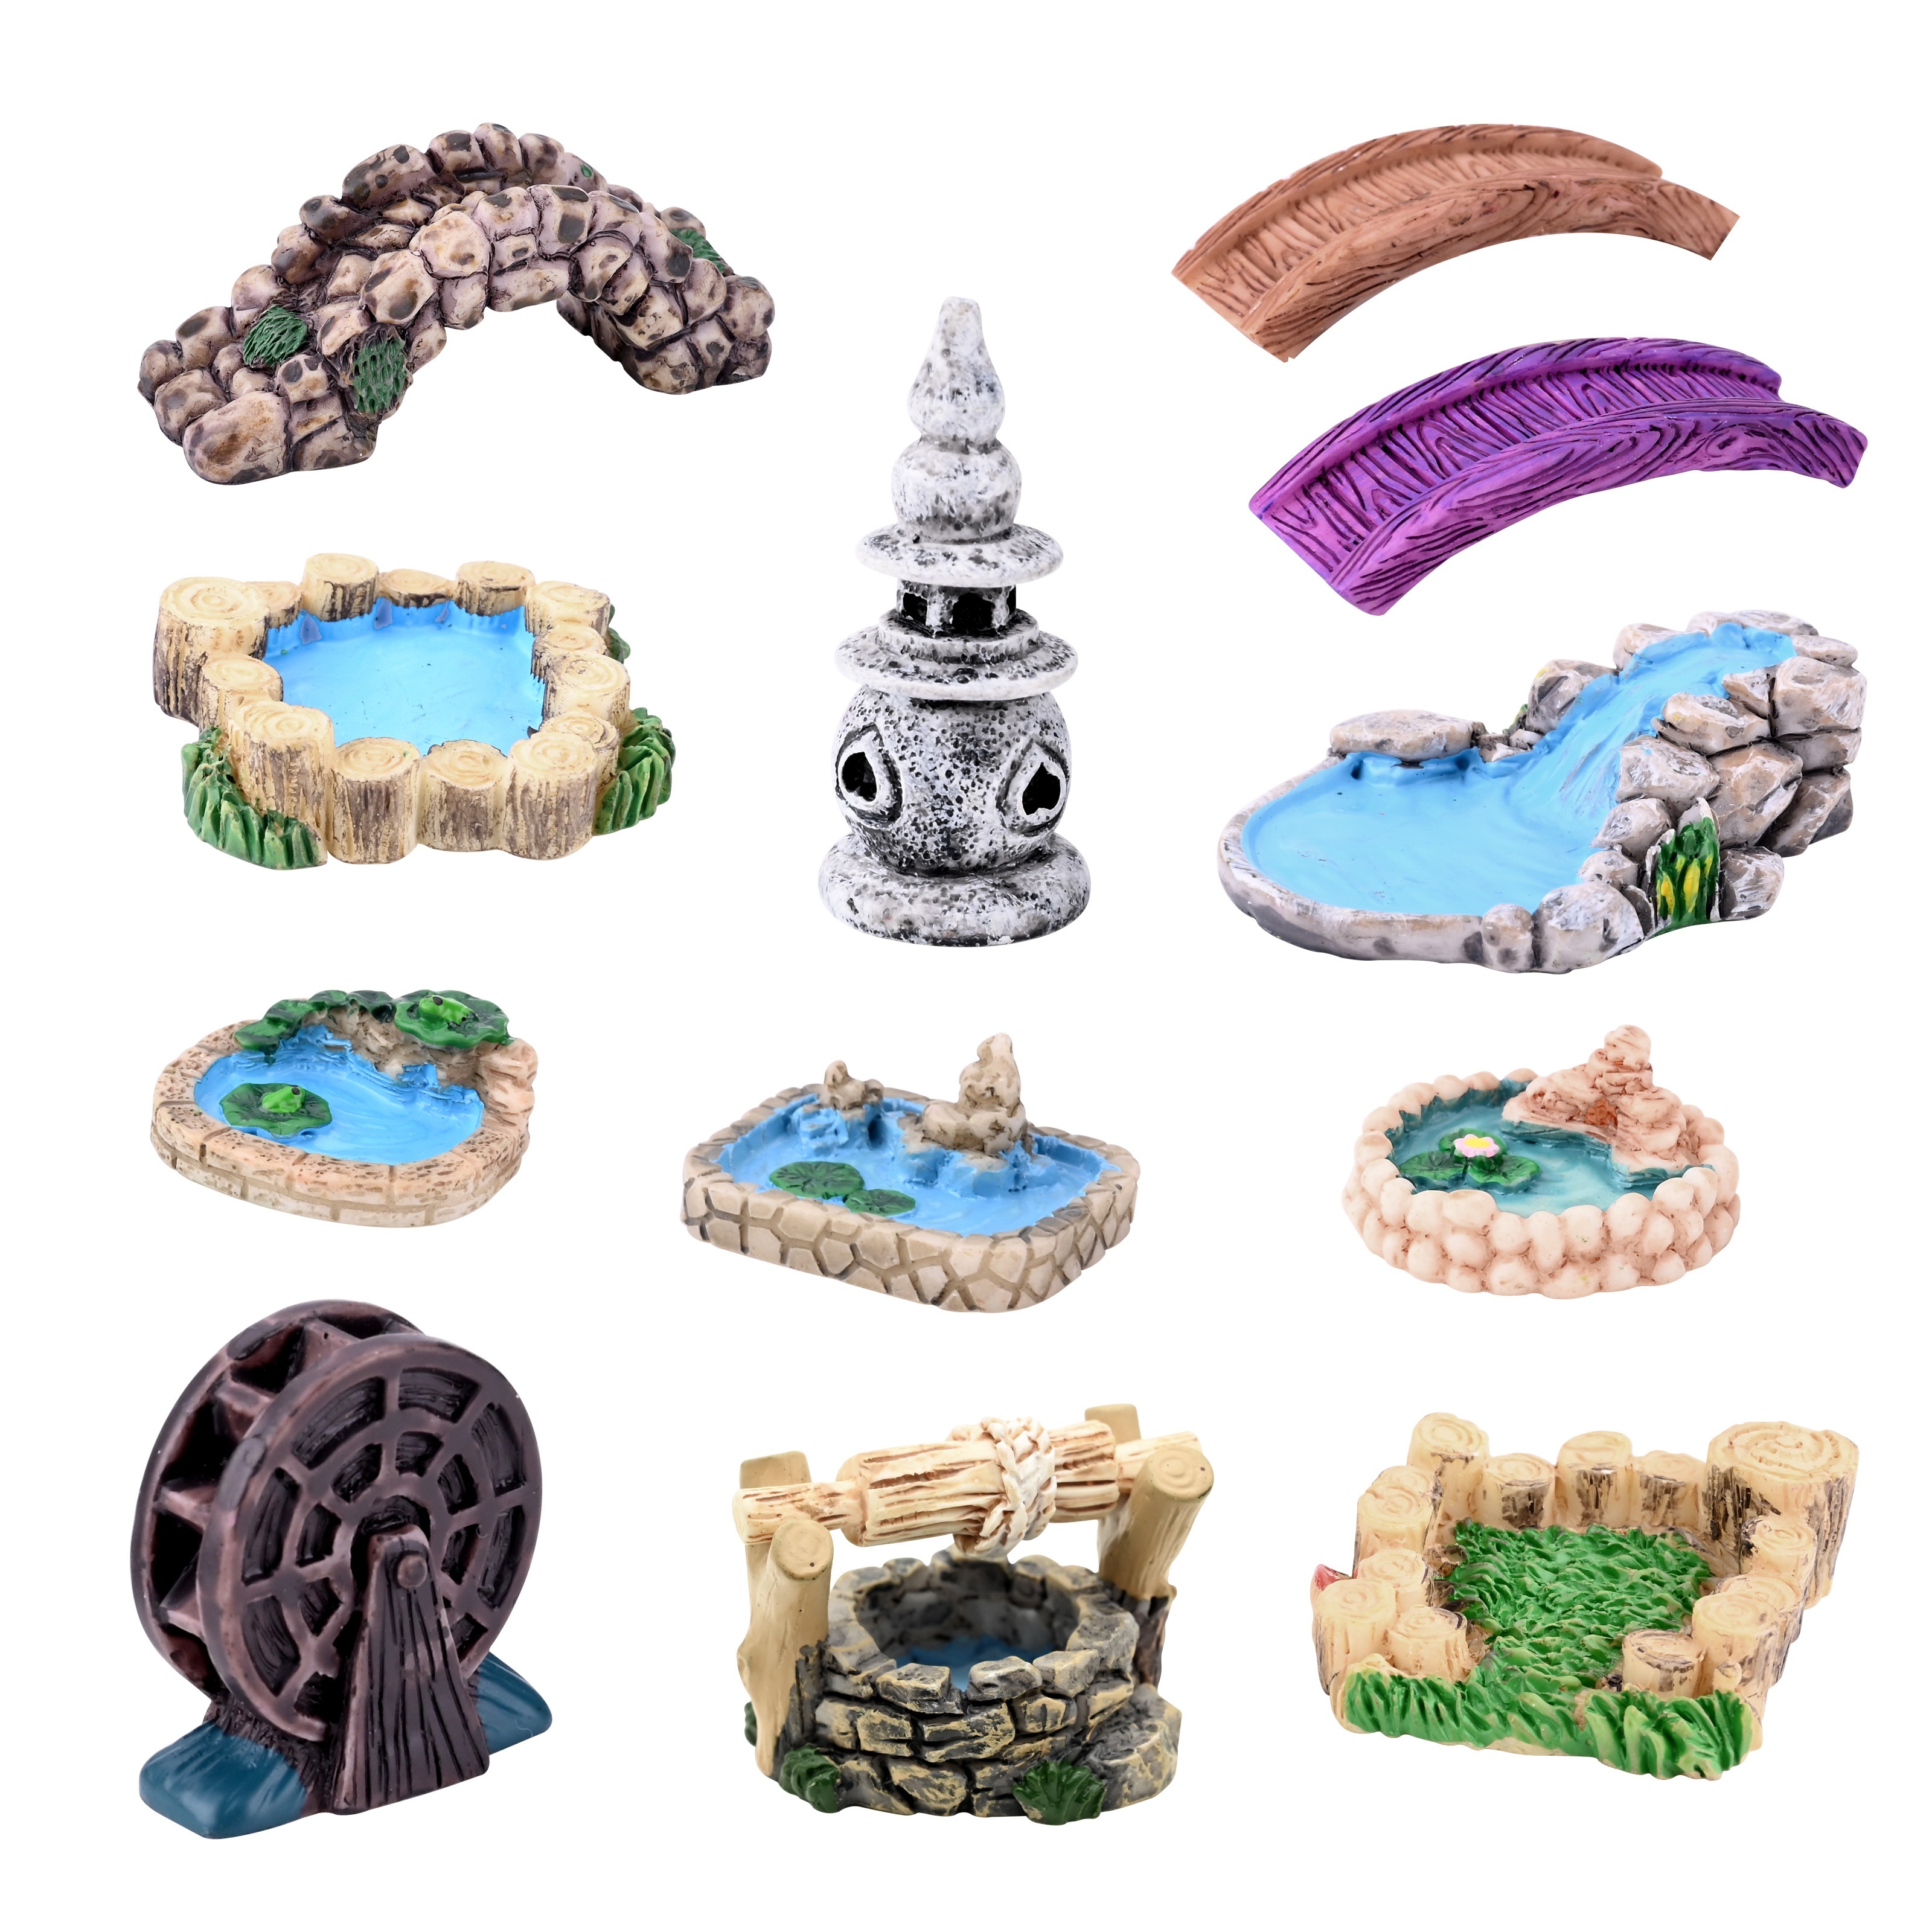 

12pcs Miniature Fairy Garden Decorations, Miniature Garden Accessories, Bridge, Water Fountain, Miniature Figurines For Lawn And Fairy Garden